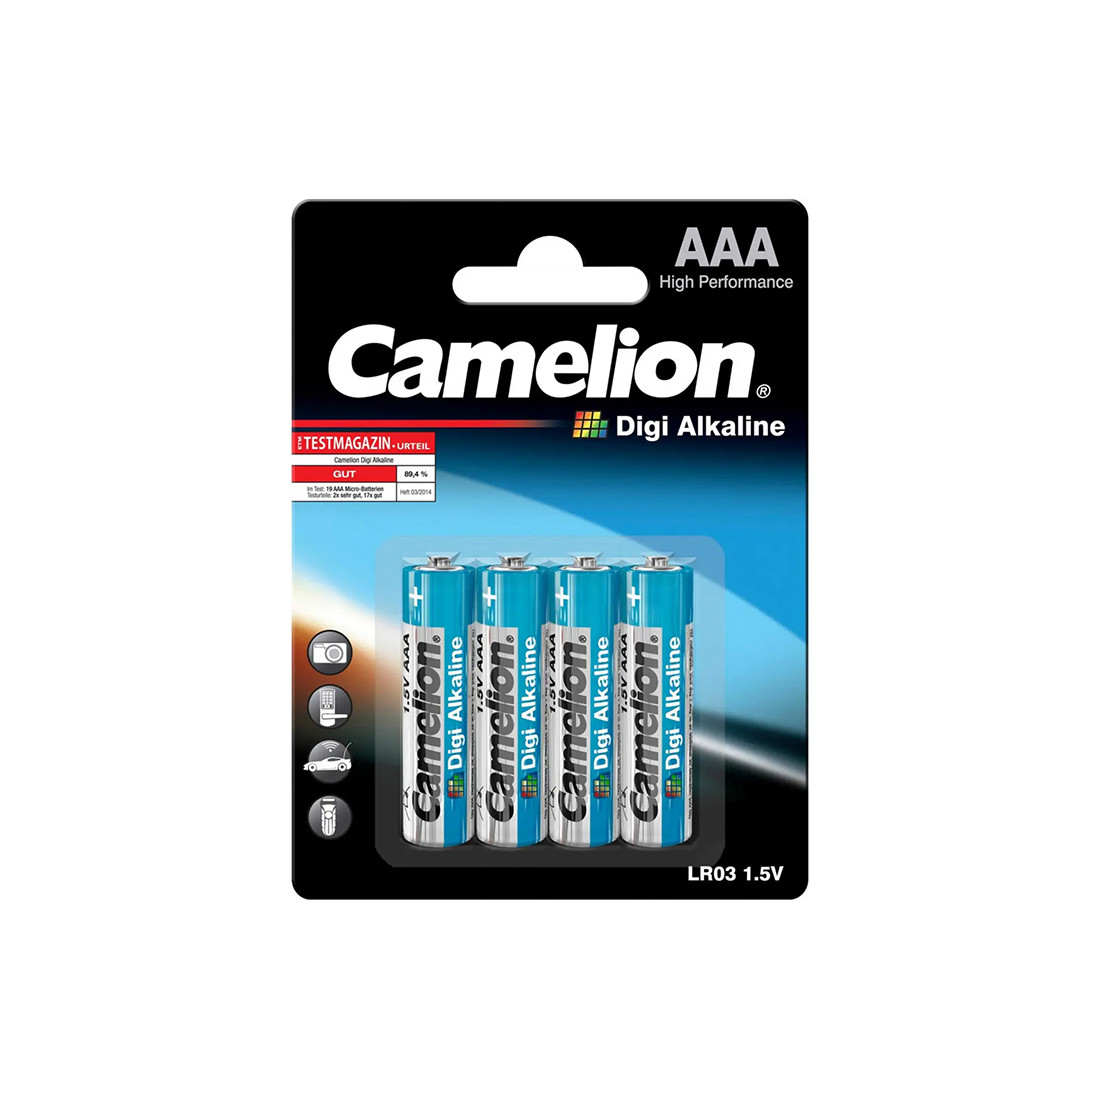 CAMELION LR03-BP4DG Батарейка Digi Alkaline, AAA, 1.5V, 1250mAh, 4 шт., Блистер